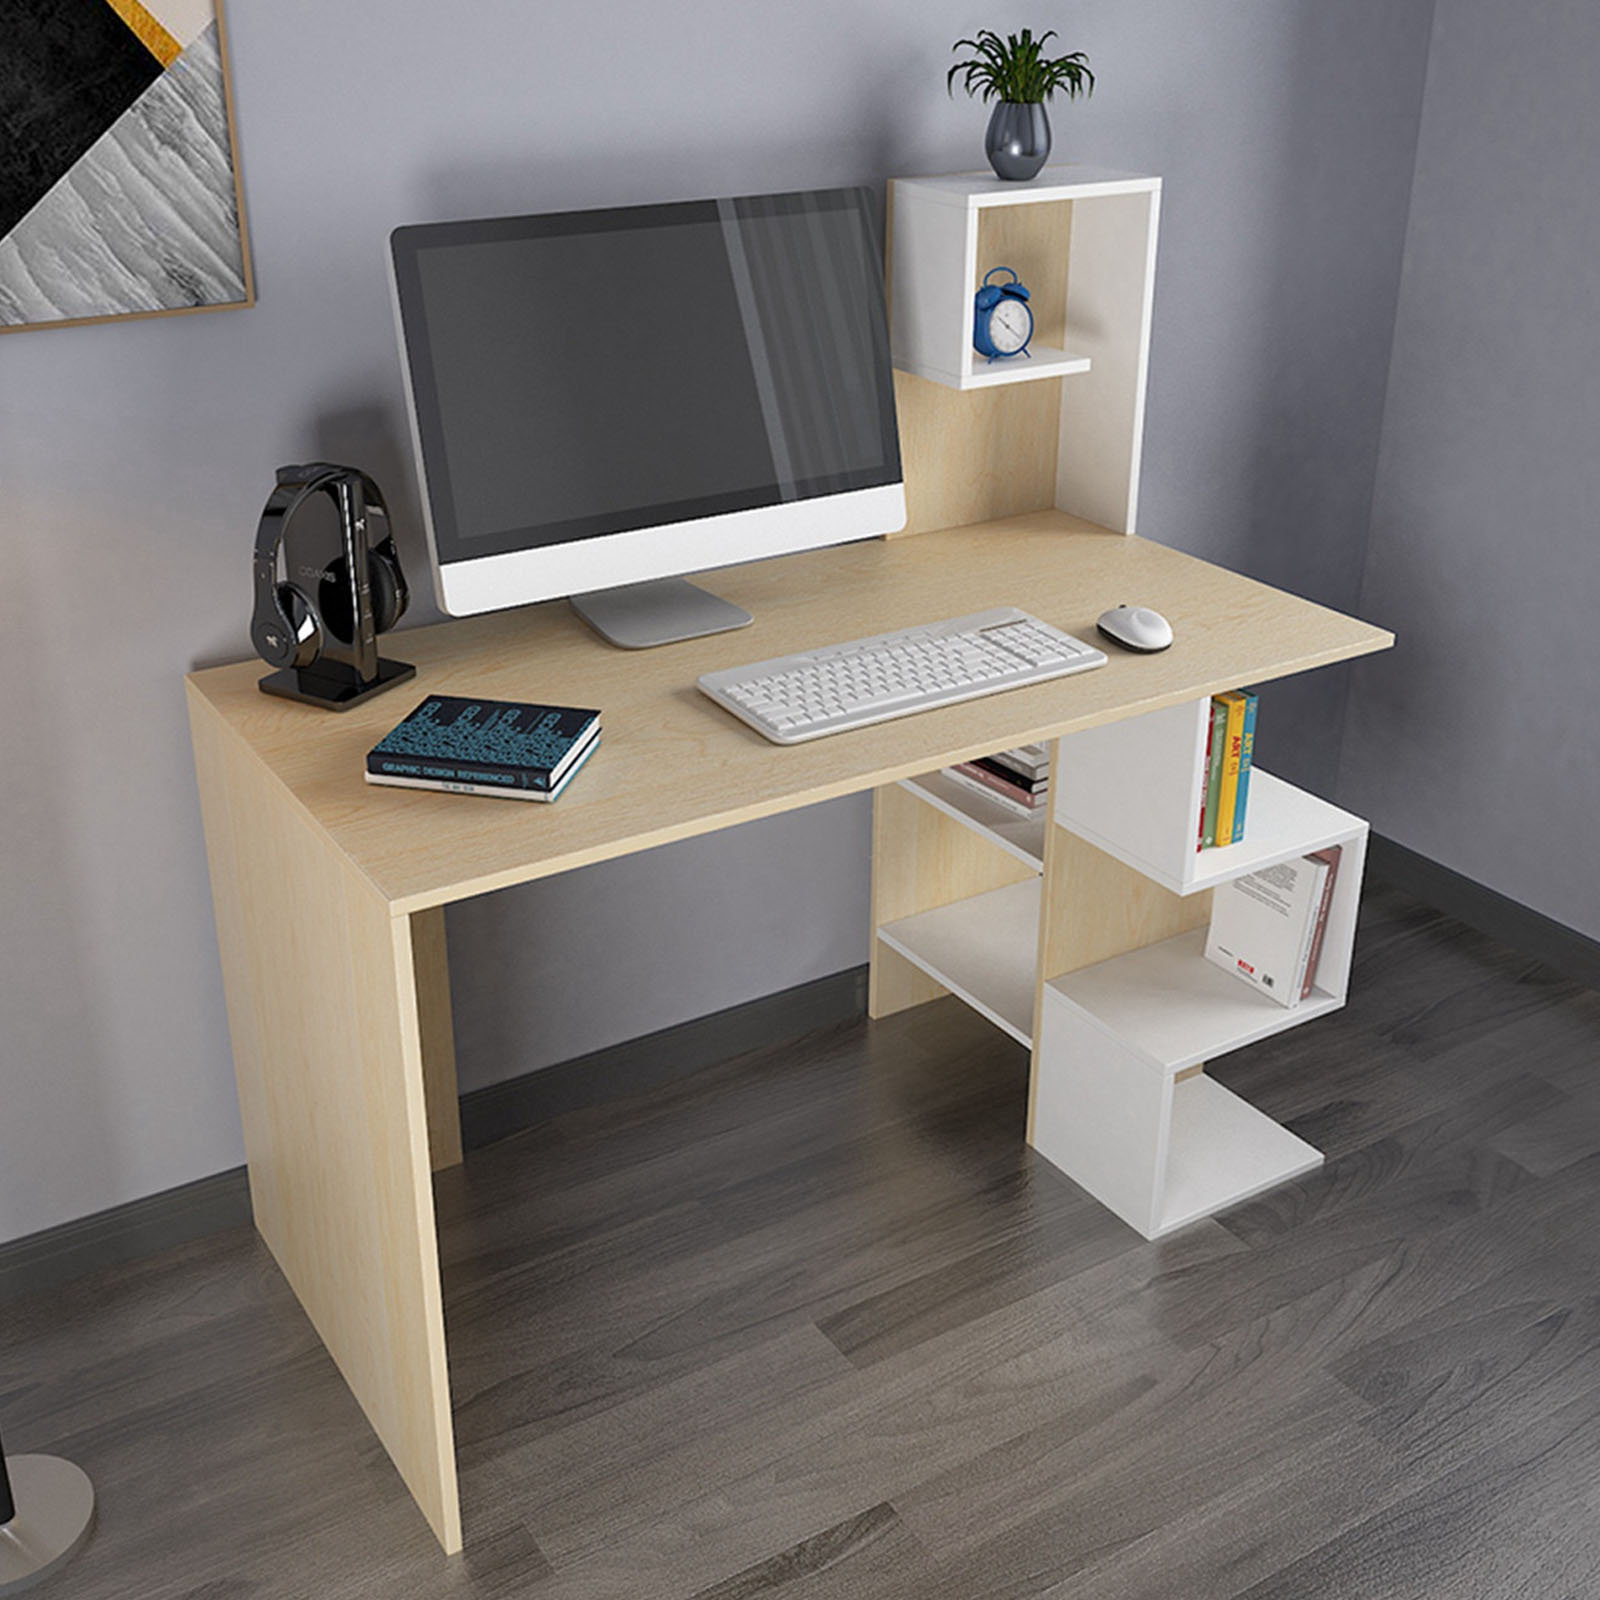 Details about   Computer Desk Home Office Desk PC Laptop Study Workstation Table with Shelf US 